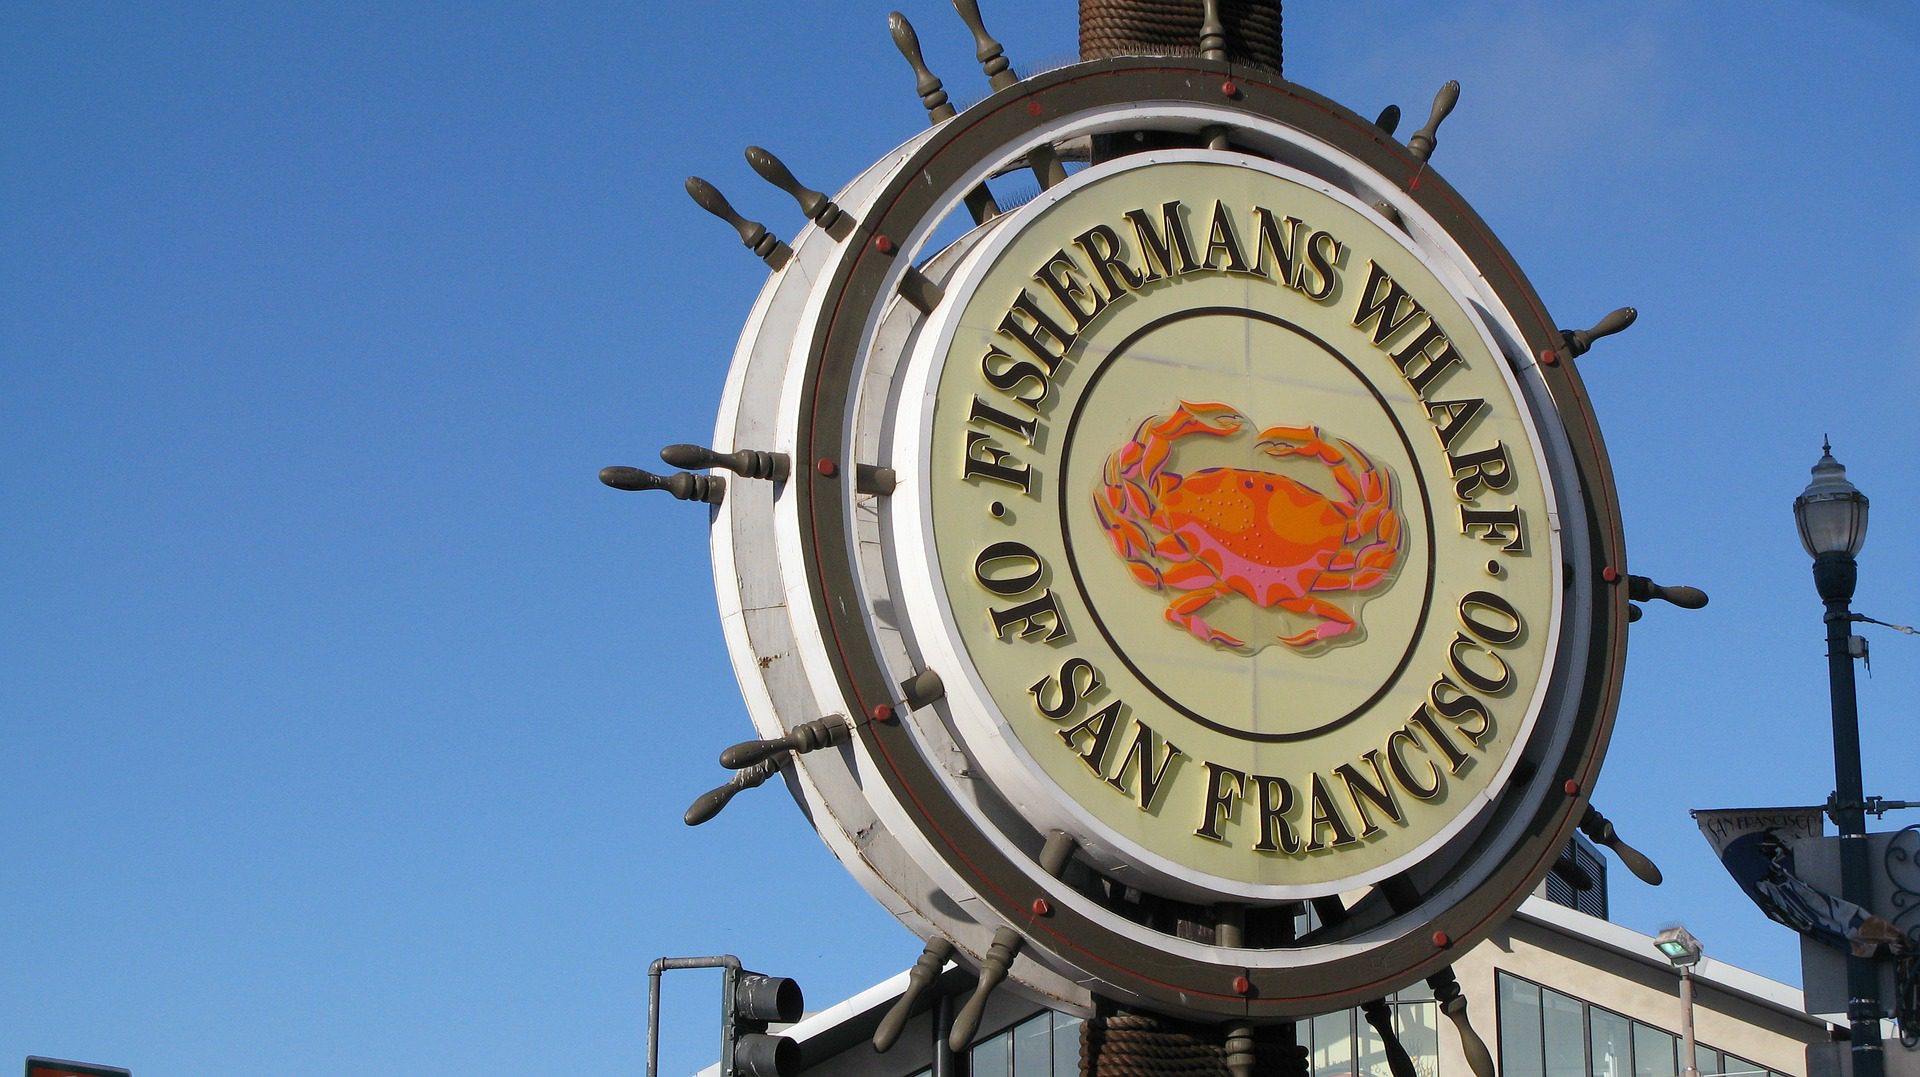 Fisherman's Wharf, San Francisco, CA